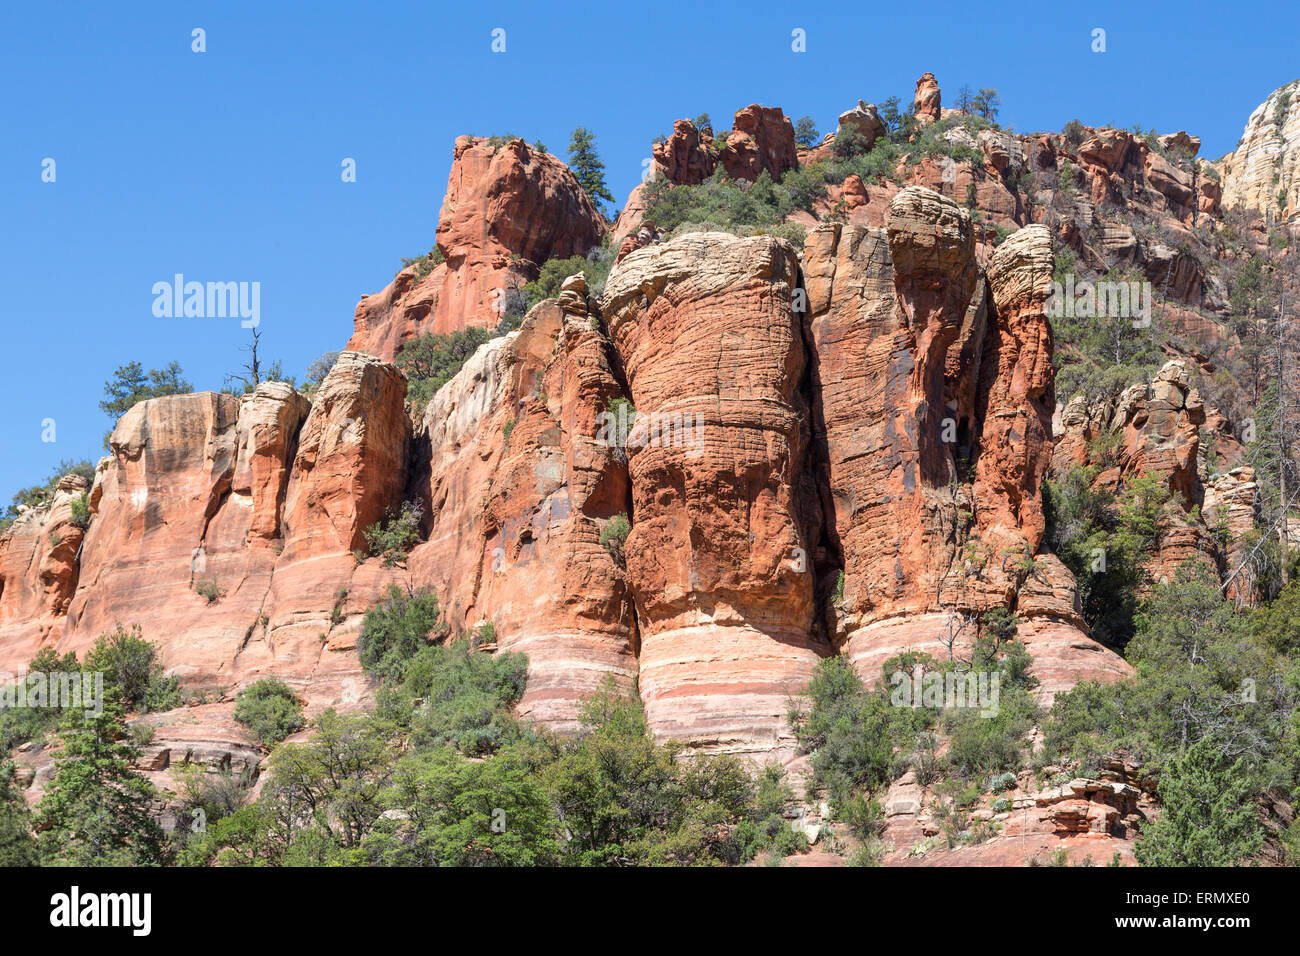 Red rock formations with a face, Sedona, Arizona, USA Stock Photo